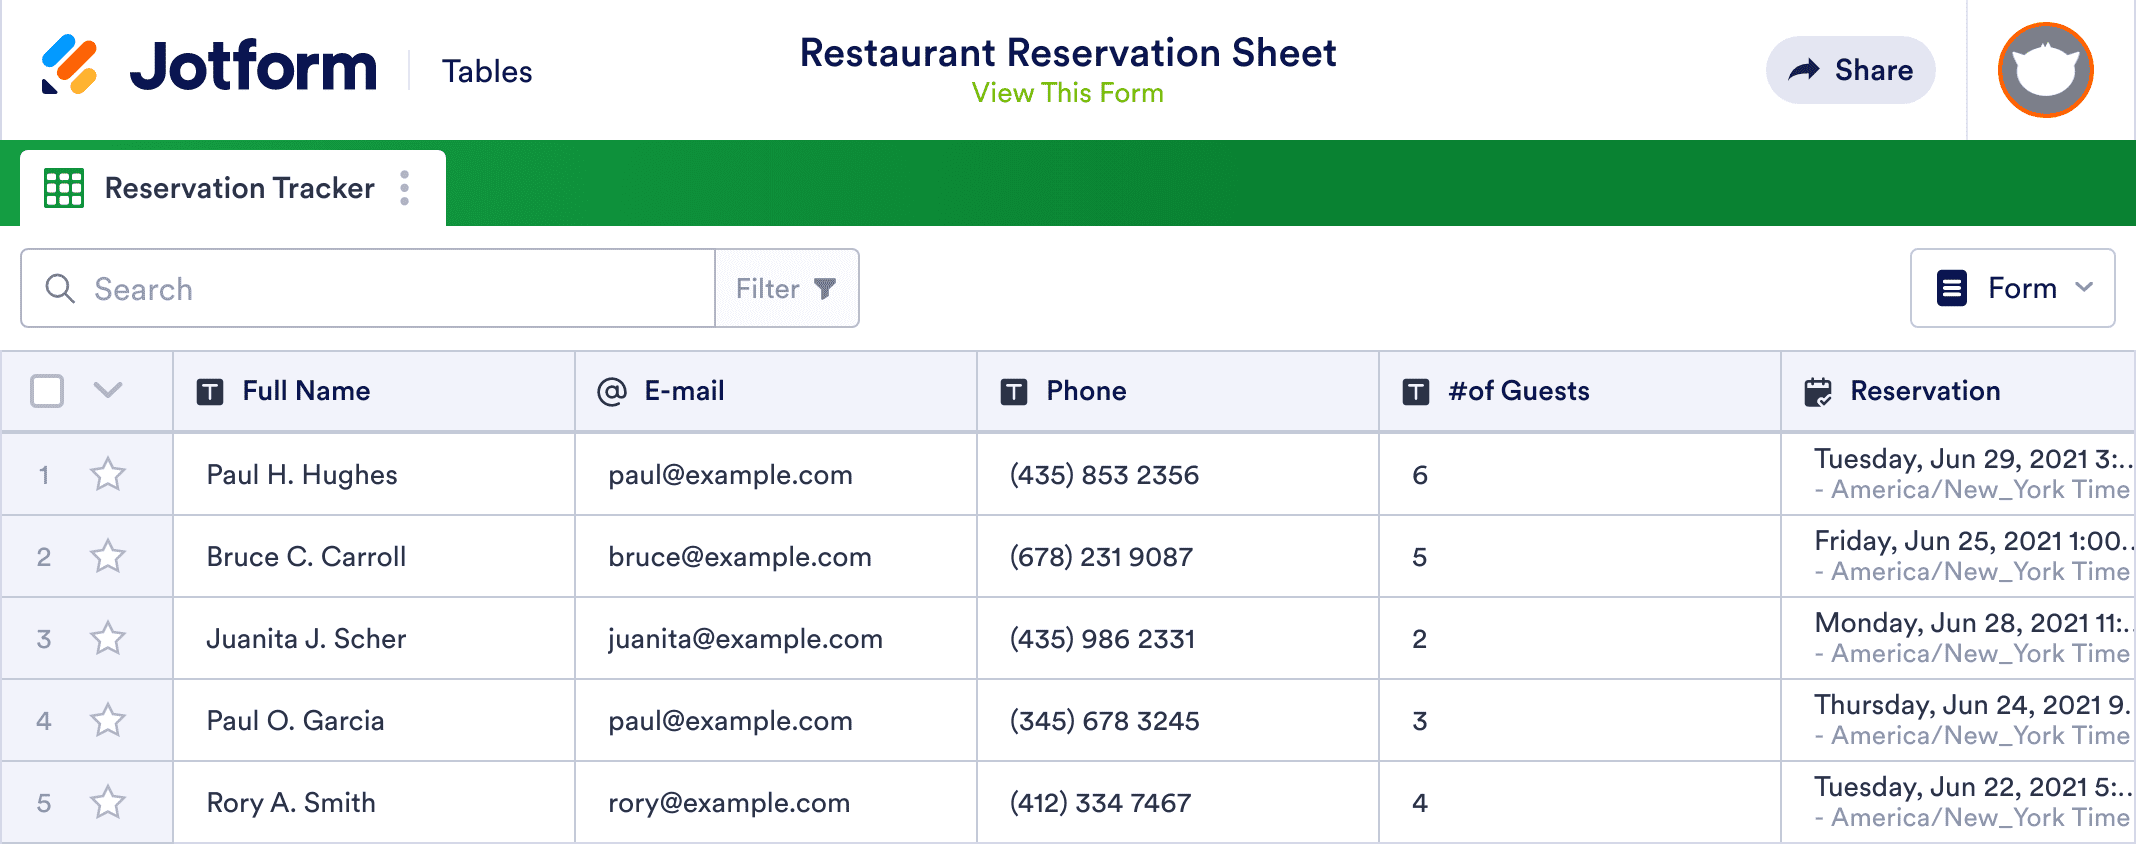 Restaurant Reservation Sheet